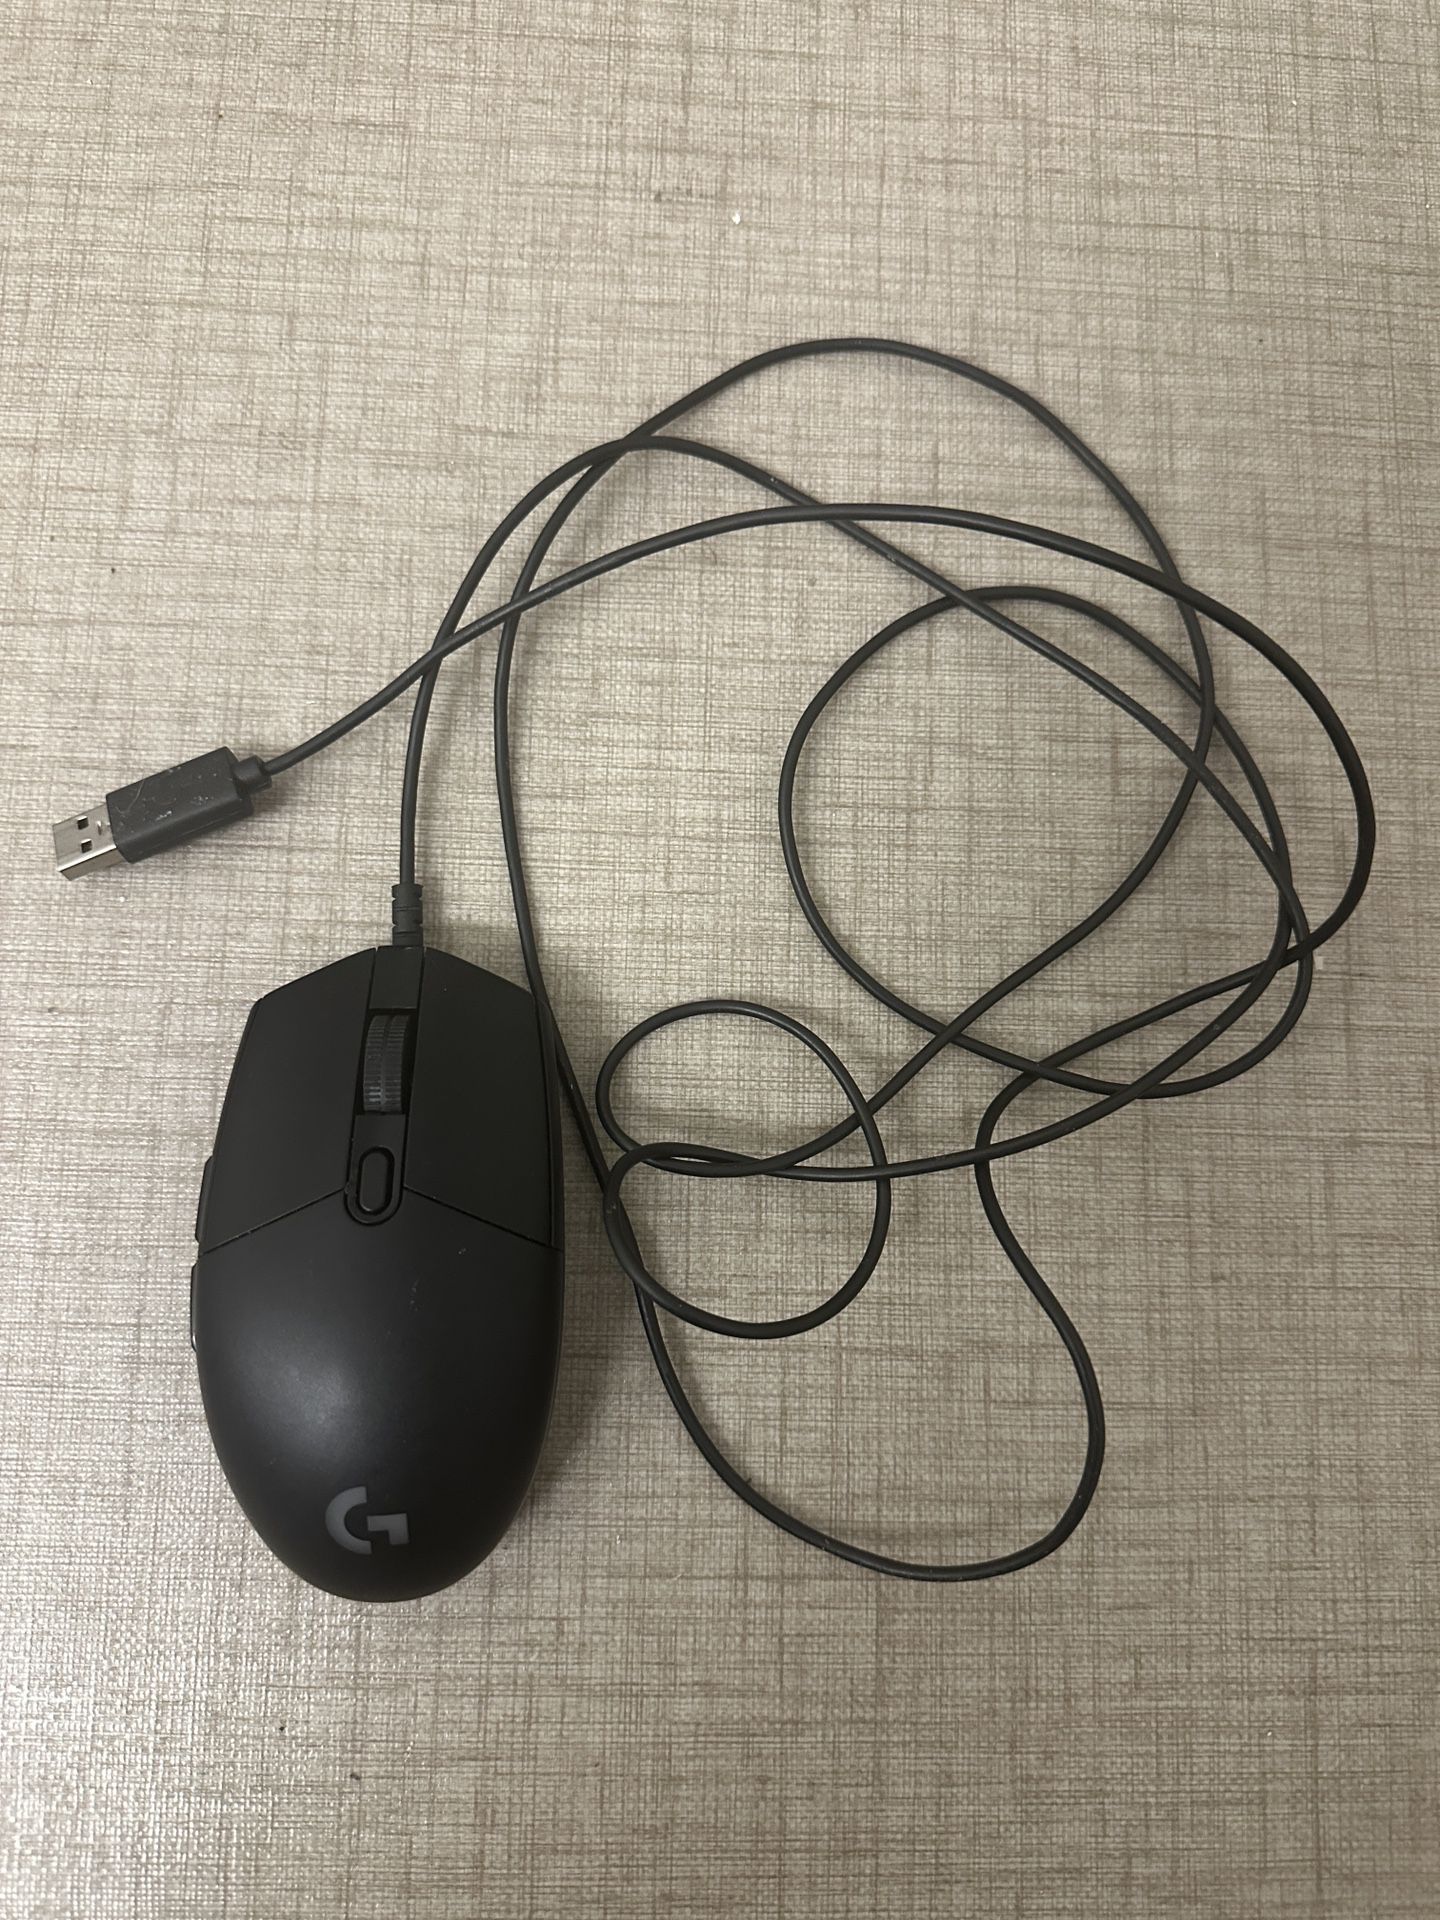 logitech led gaming mouse/ g203 LIGHTSYNC Gaming Mouse.